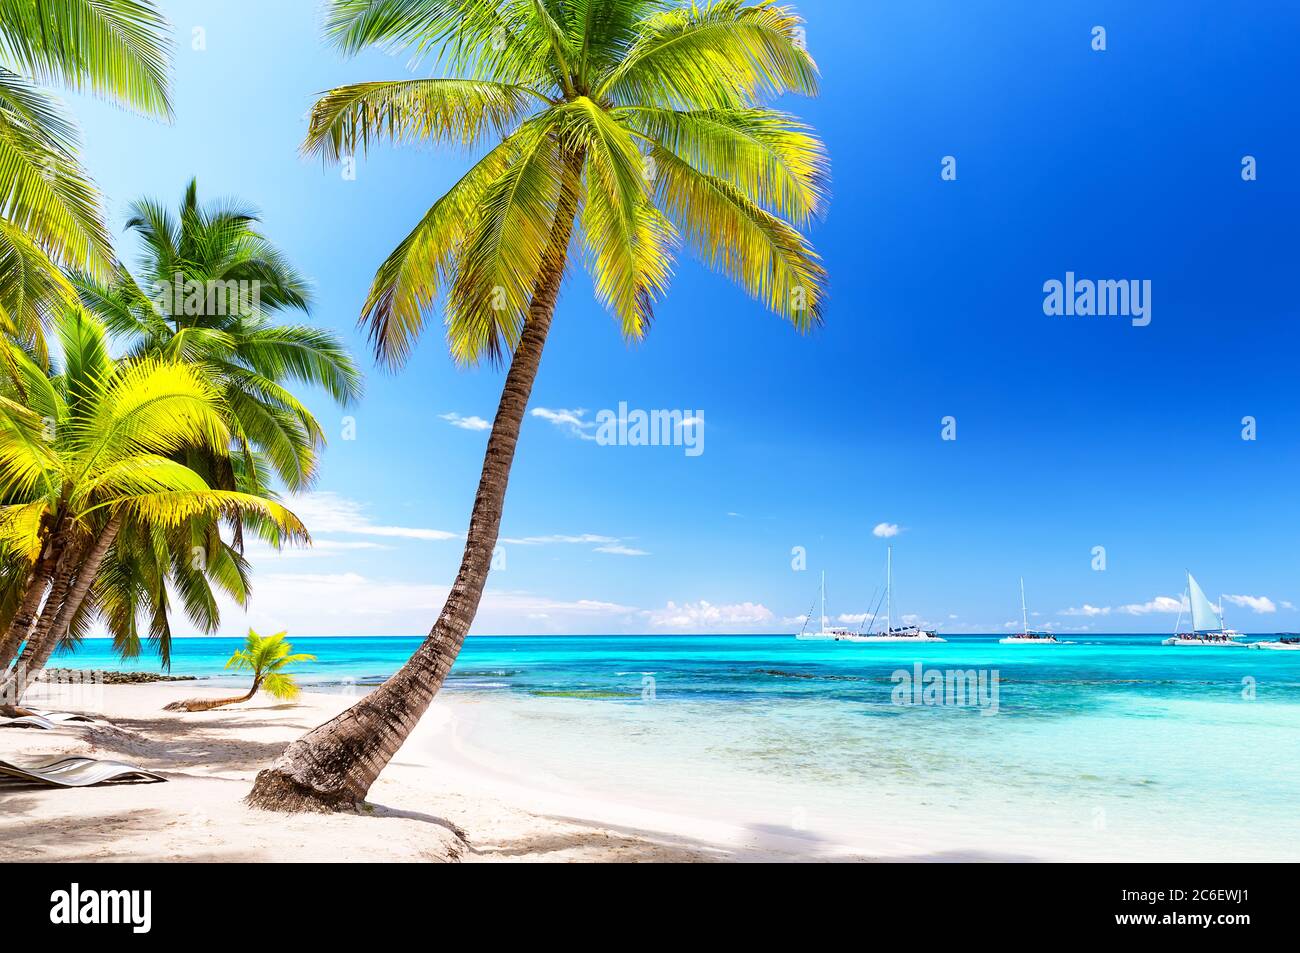 Coconut Palm trees on white sandy beach in Caribbean sea, Saona island. Dominican Republic. Stock Photo